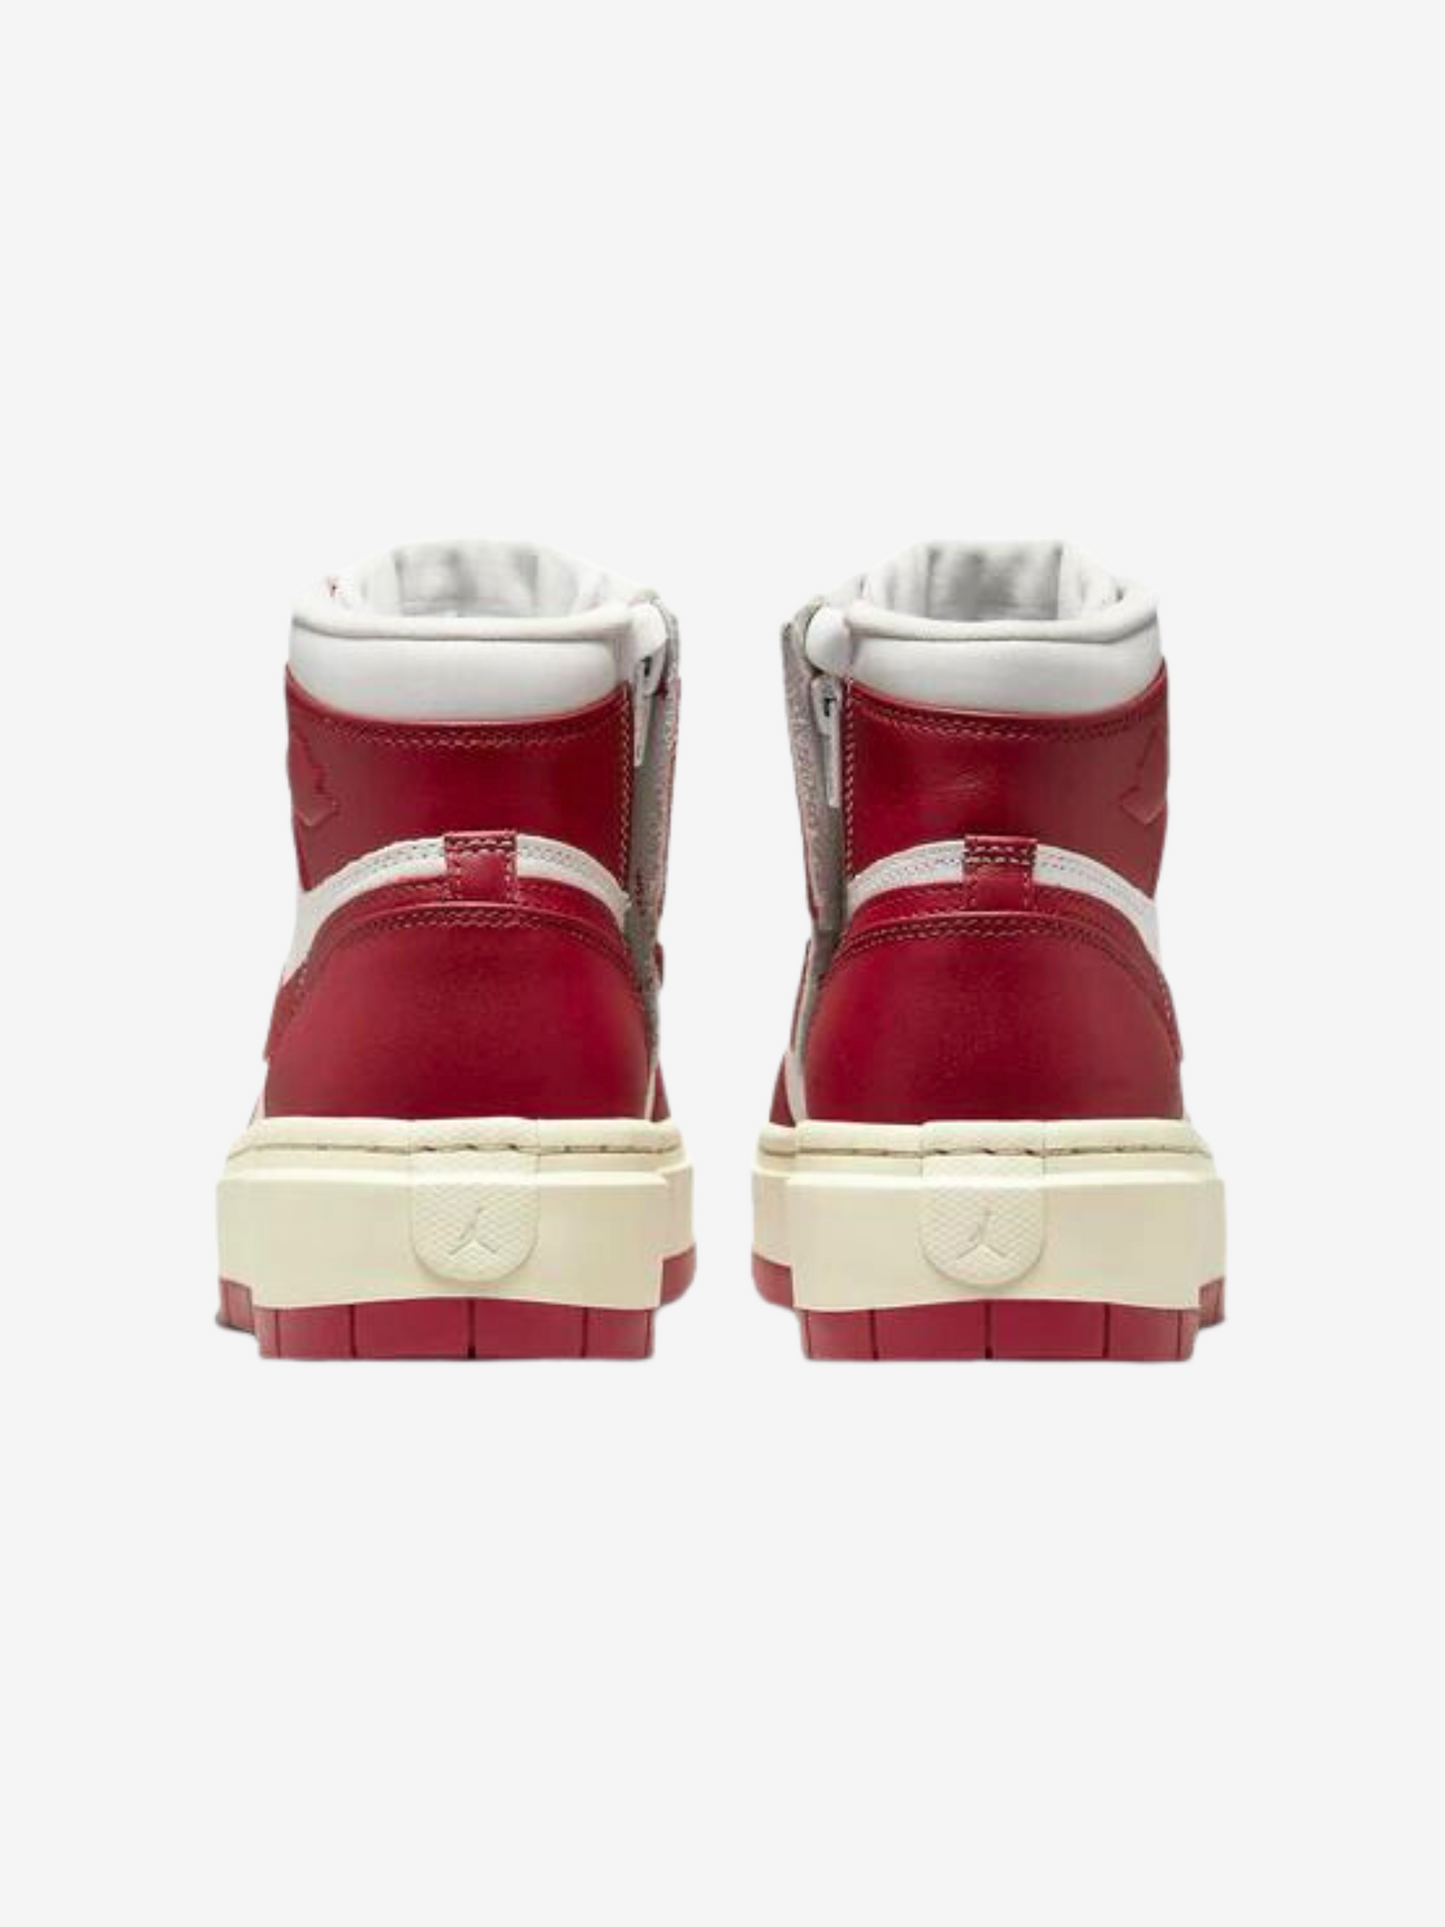 Womens Nike Air Jordan 1 Shoes - Elevate - Varsity Red Size 8